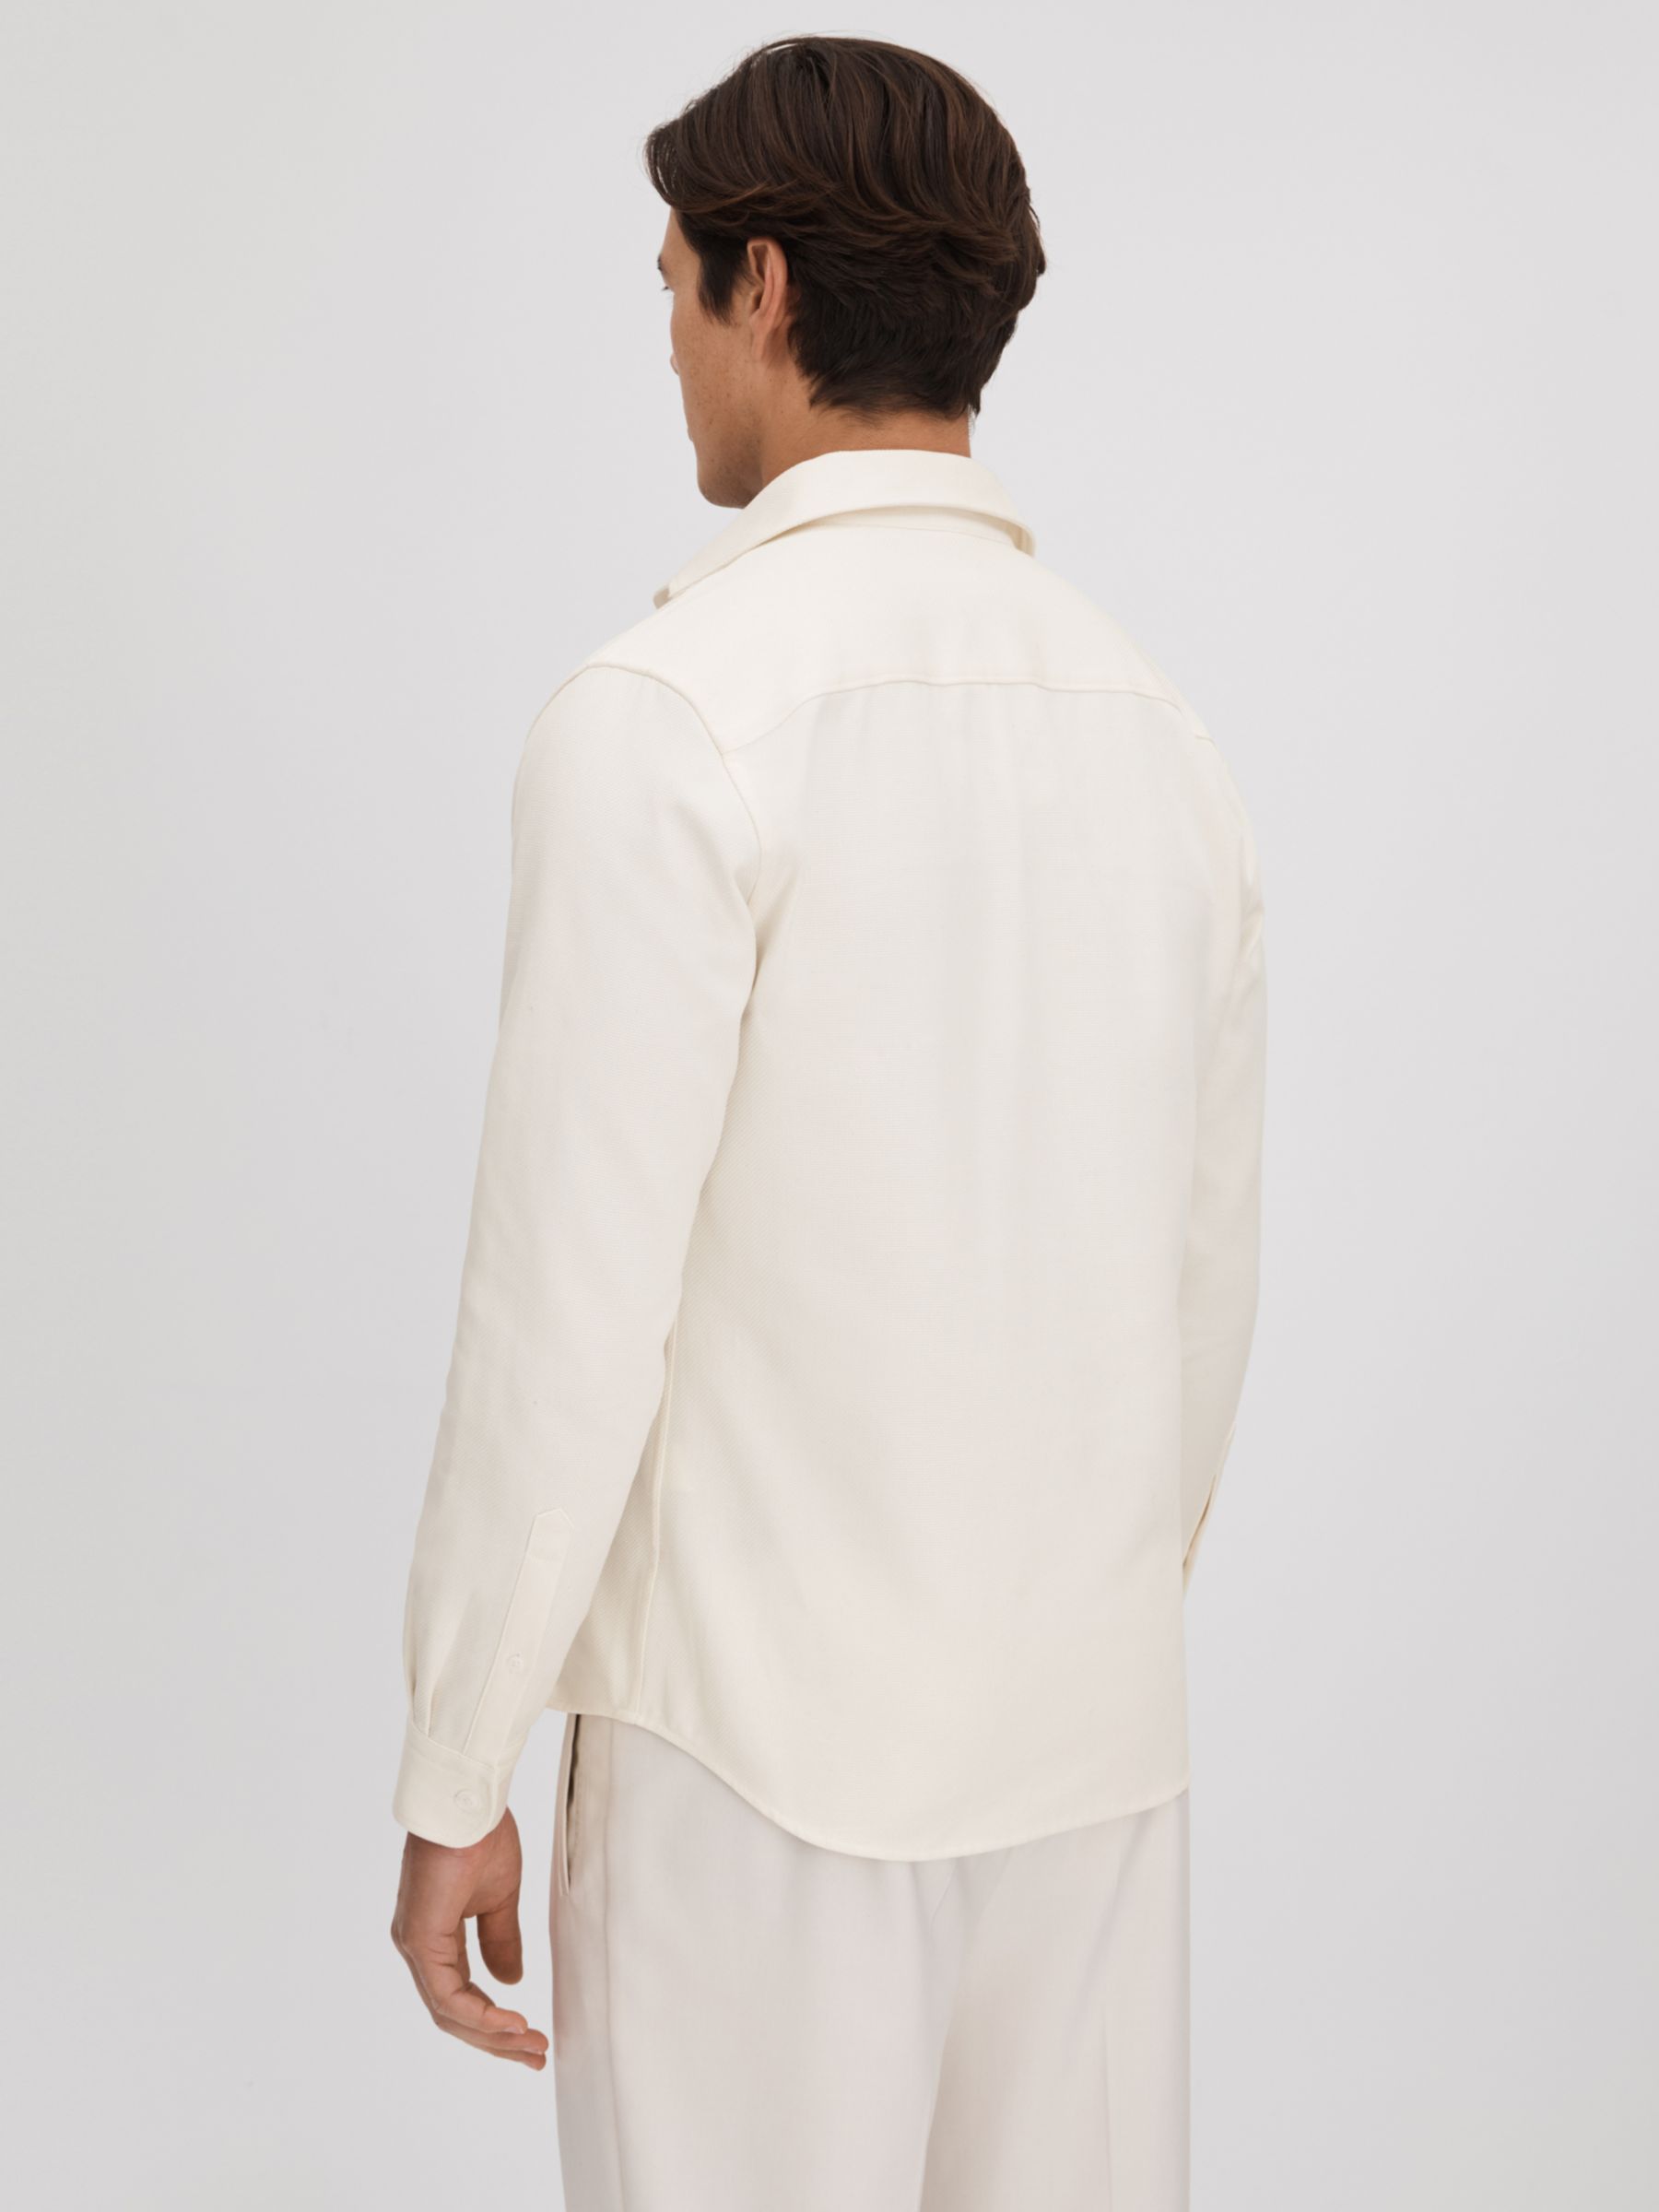 Buy Reiss Arlo Long Sleeve Textured Shirt Online at johnlewis.com